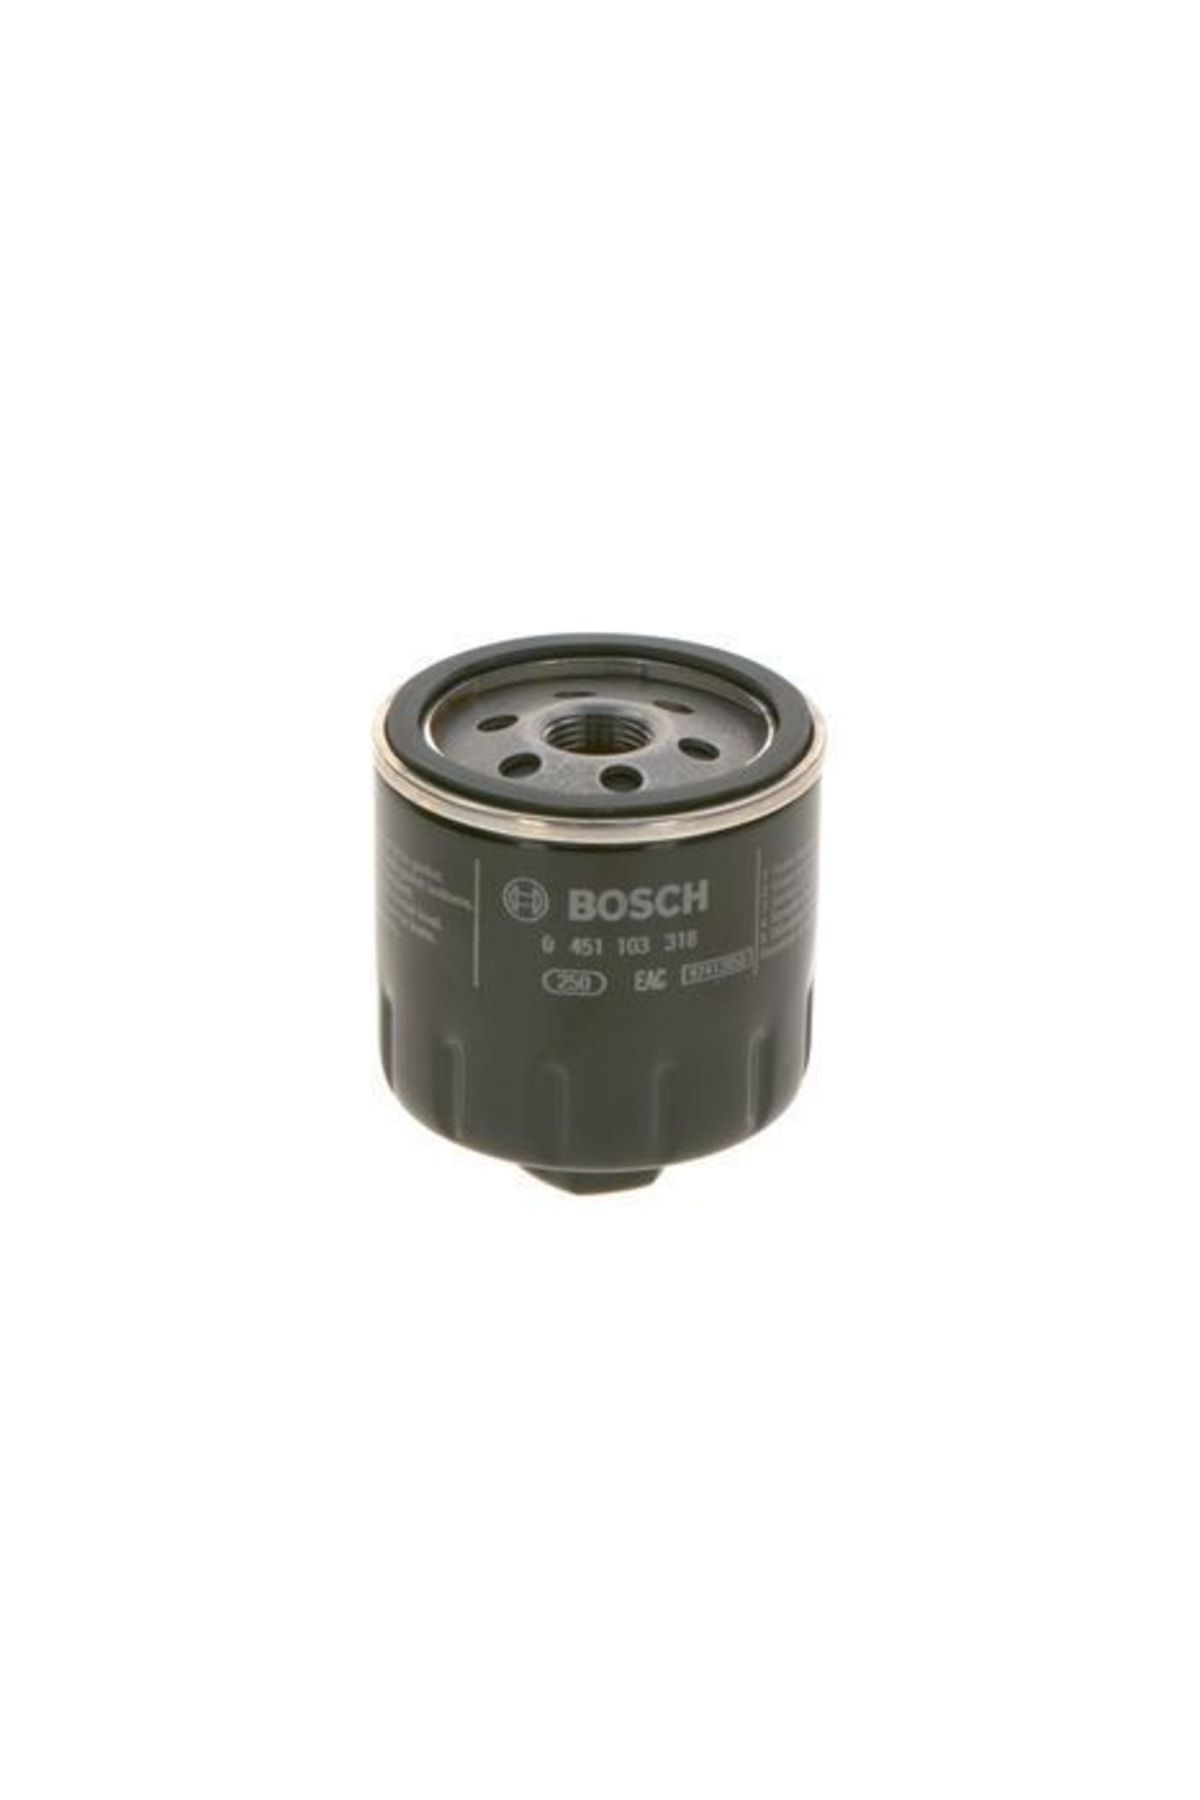 Bosch Yağ Filtresi [ Volkswagen Golf Vıı , Jetta , Passat , Polo 1.2 Tsi / 1.4 Tsi 2013 - ] Eski No F02640